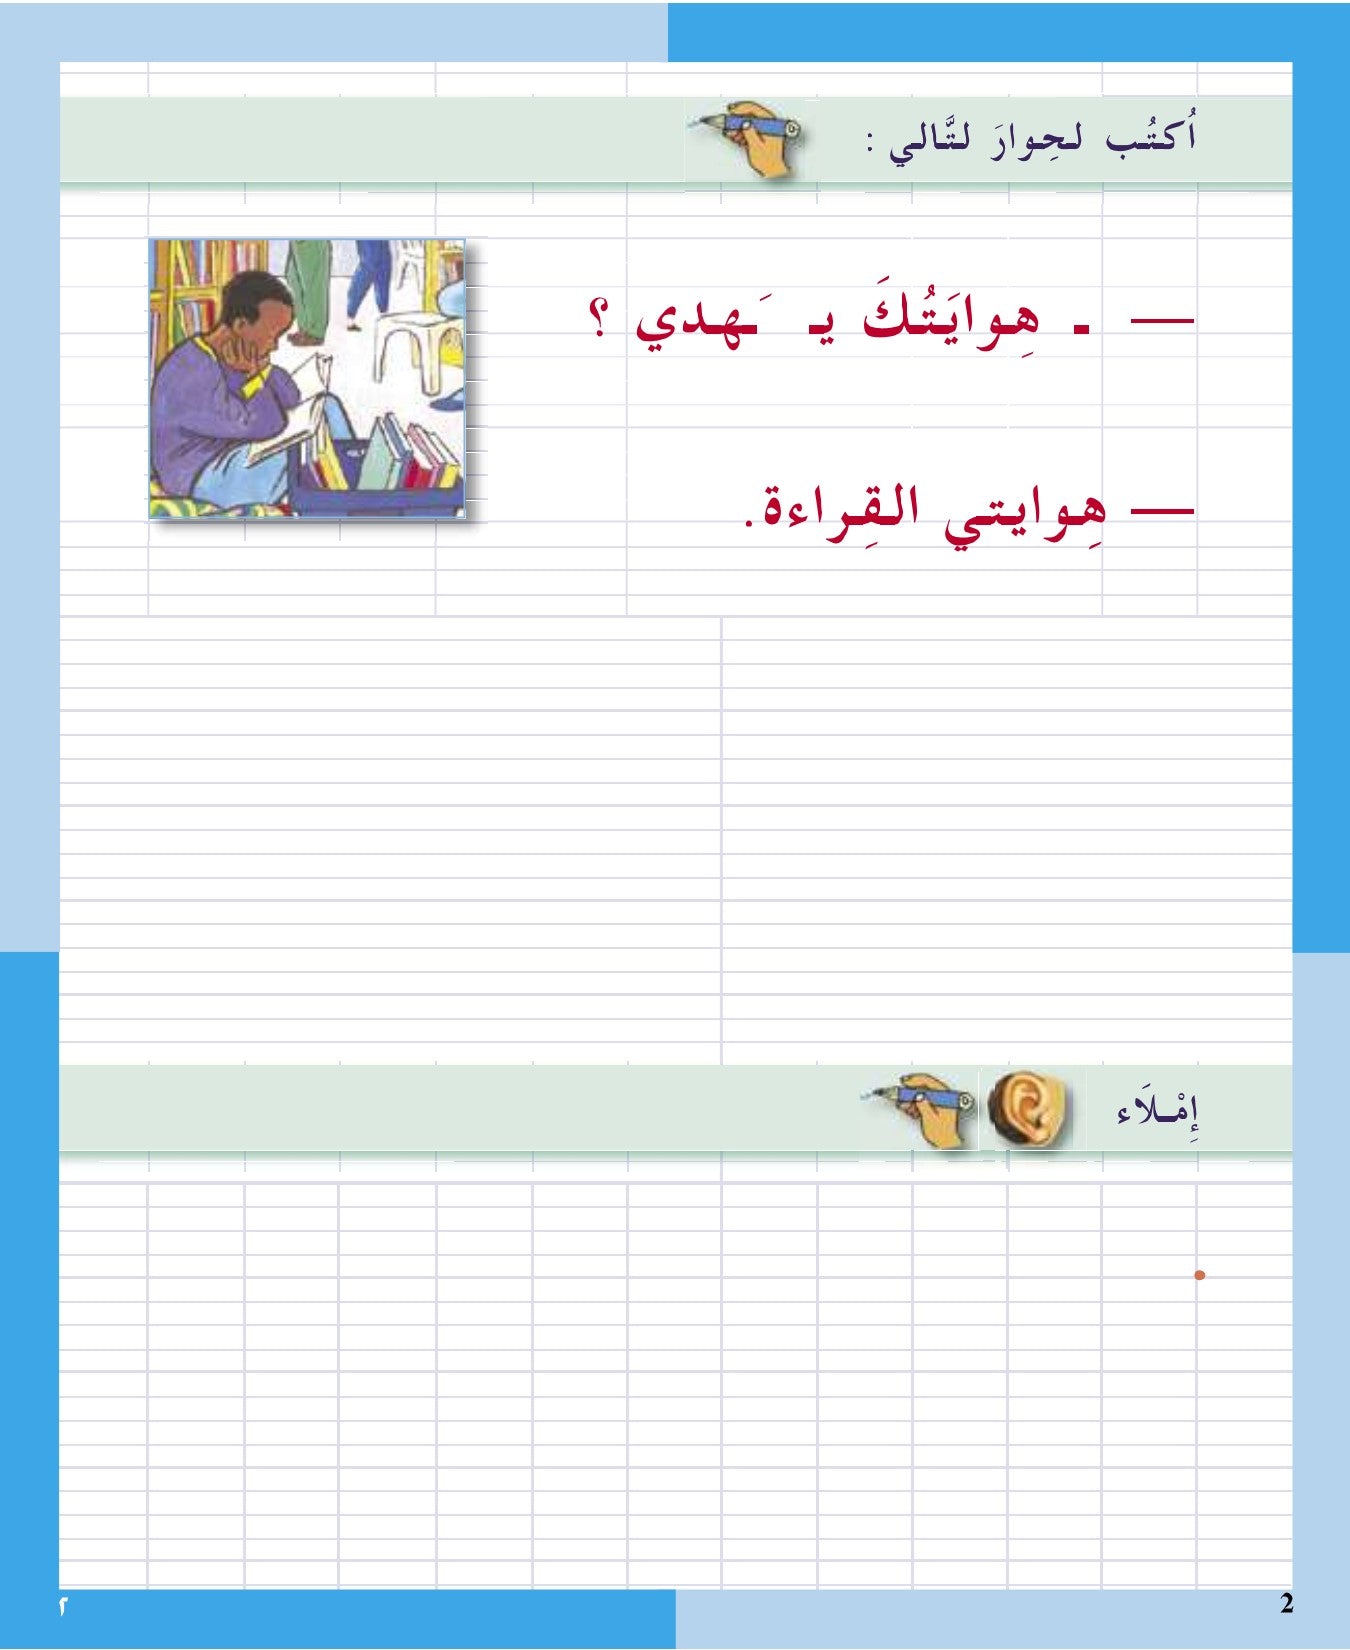 I Love the Arabic Language - Handwriting & Spelling (الخط و الإملاء) - Level 1